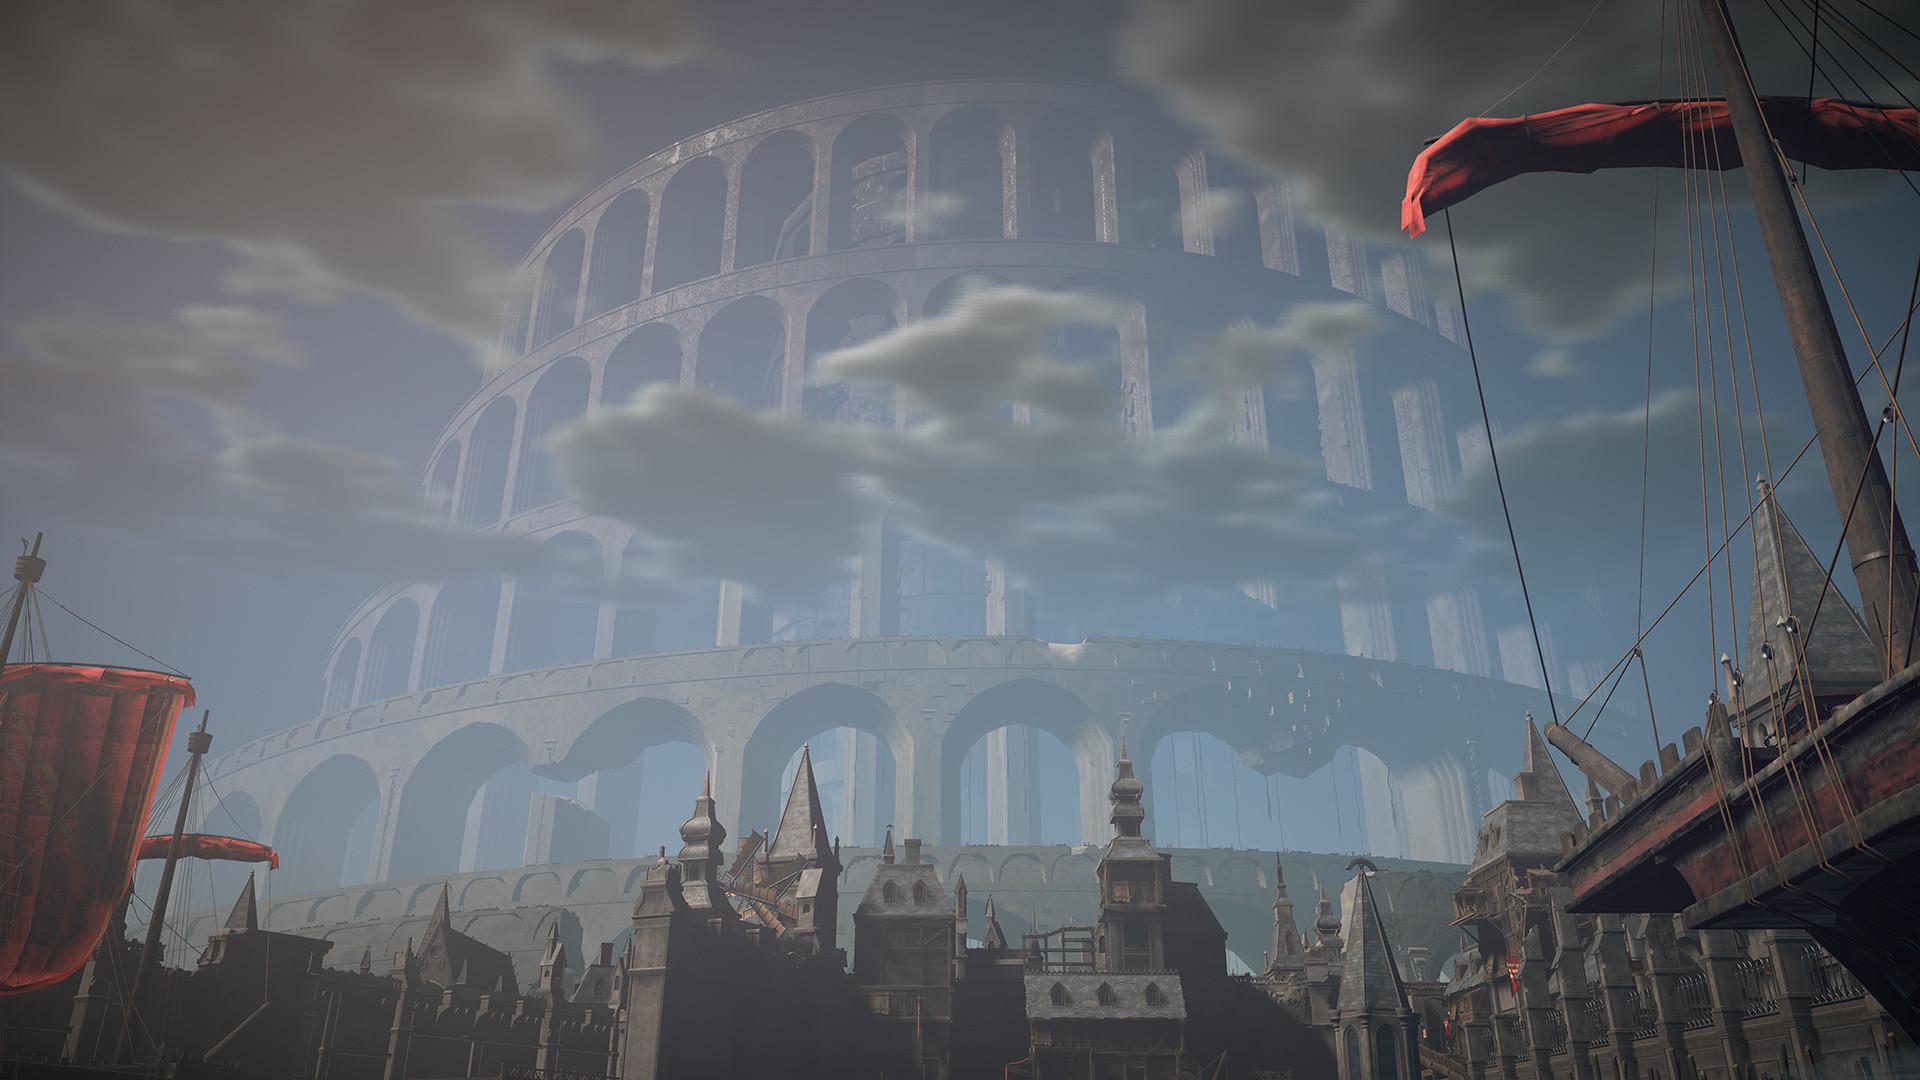 Screenshot №2 from game BABYLON'S FALL